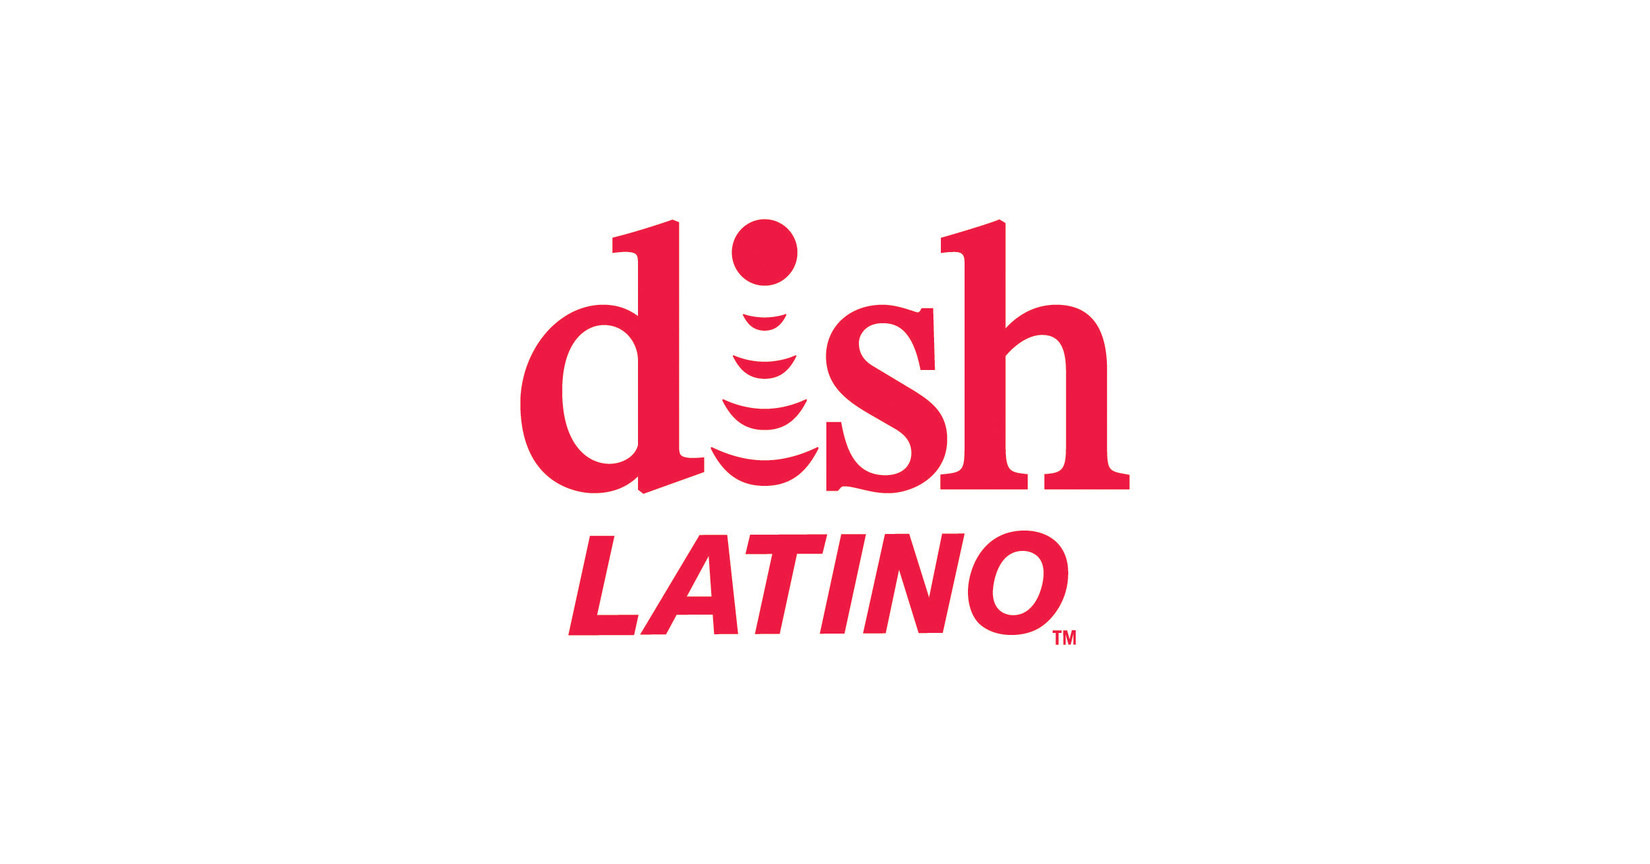 Dishes logo. Crockery logo. Dish на английском языке